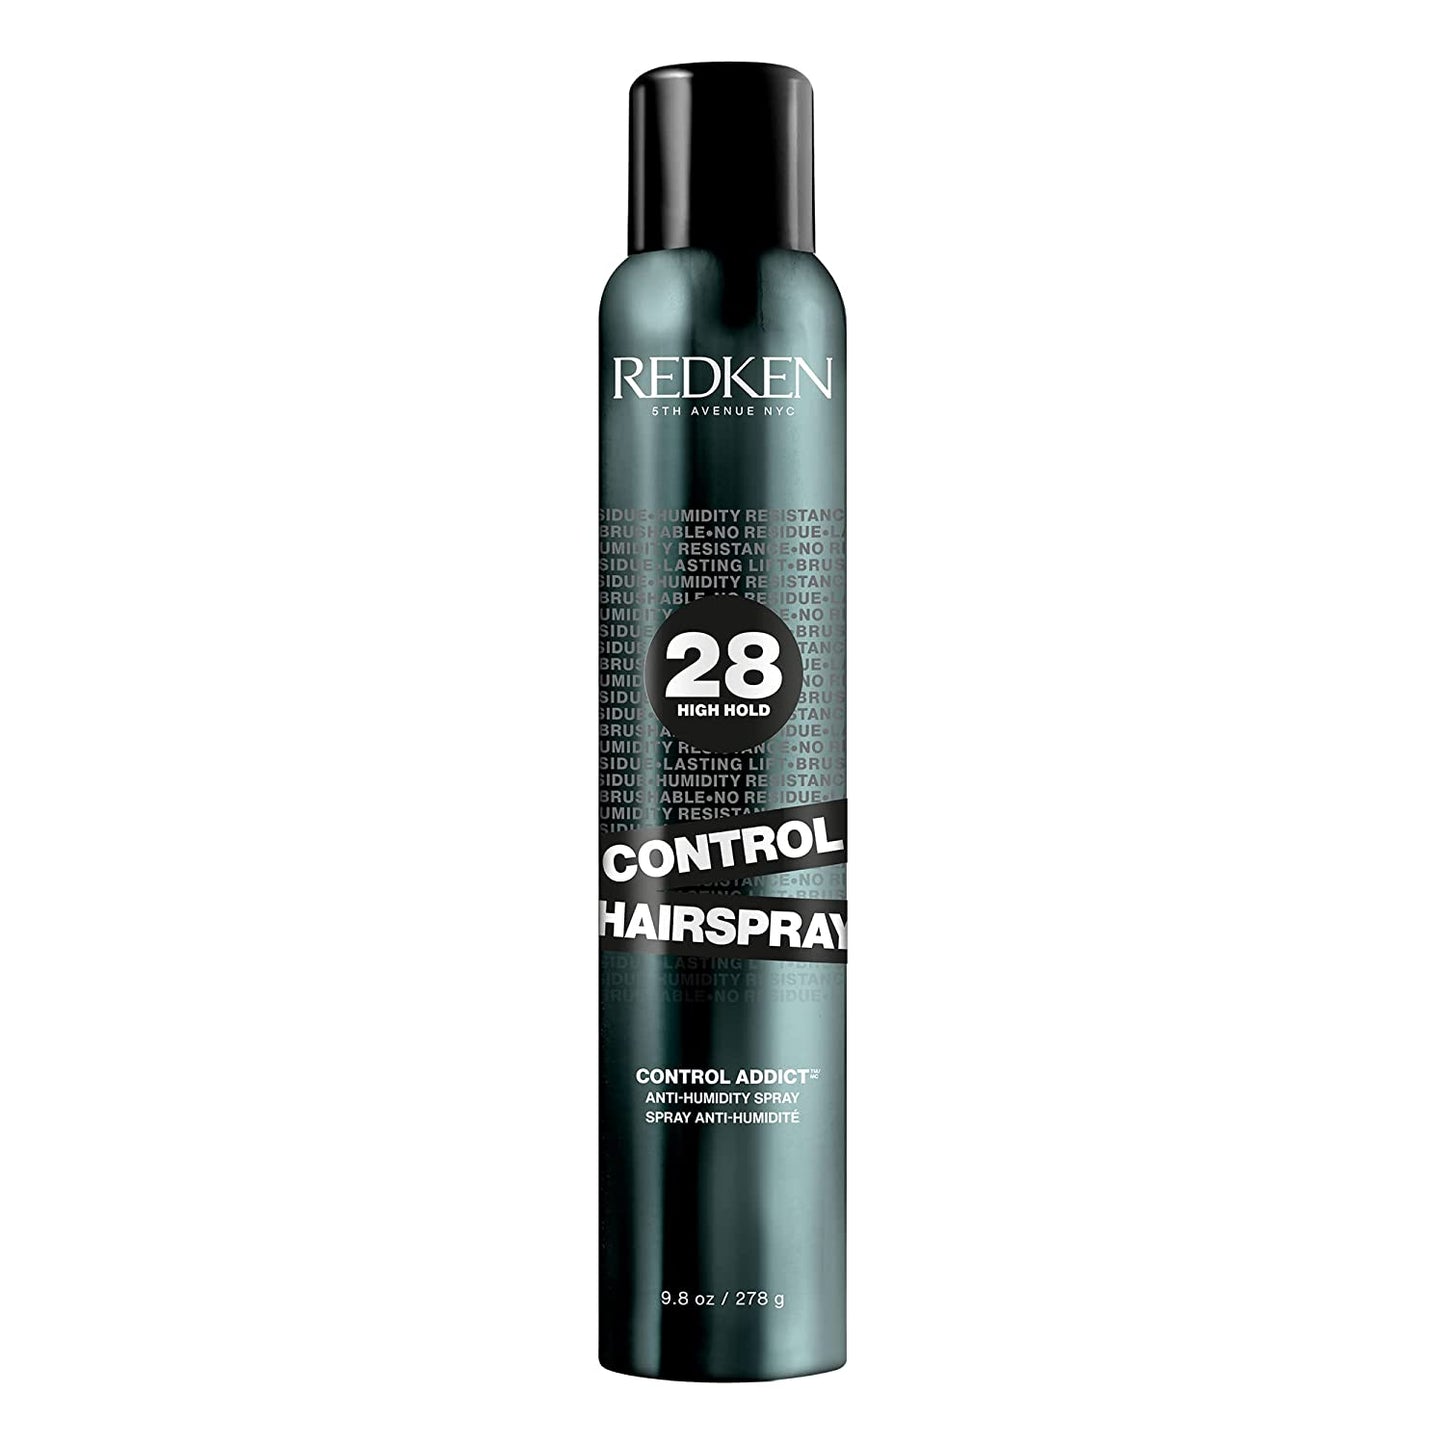 Redken 5th Avenue Nyc 28 High Hold Control HairSpray Anti-Humidity Spray 9.8 oz/ 278g